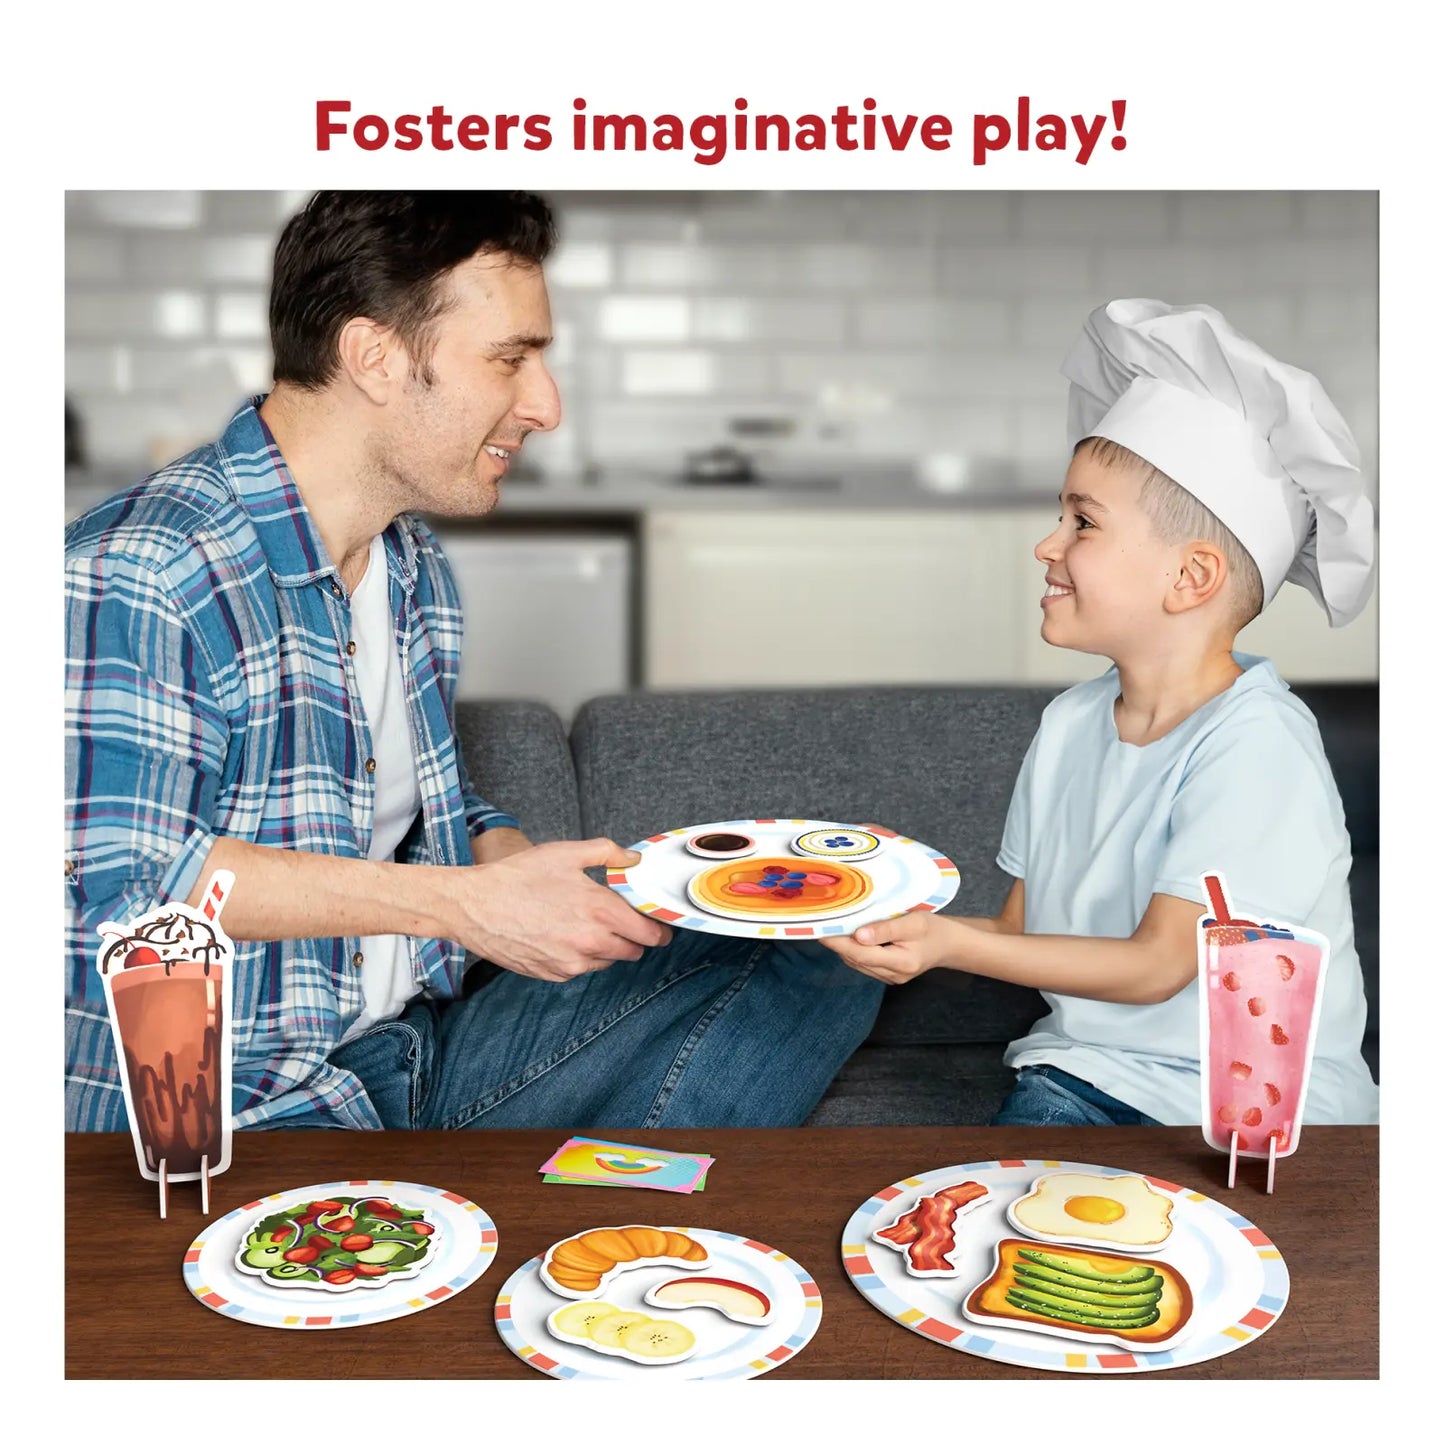 Rainbow Diner | Pretend Play Restaurant Playset (ages 3-8)